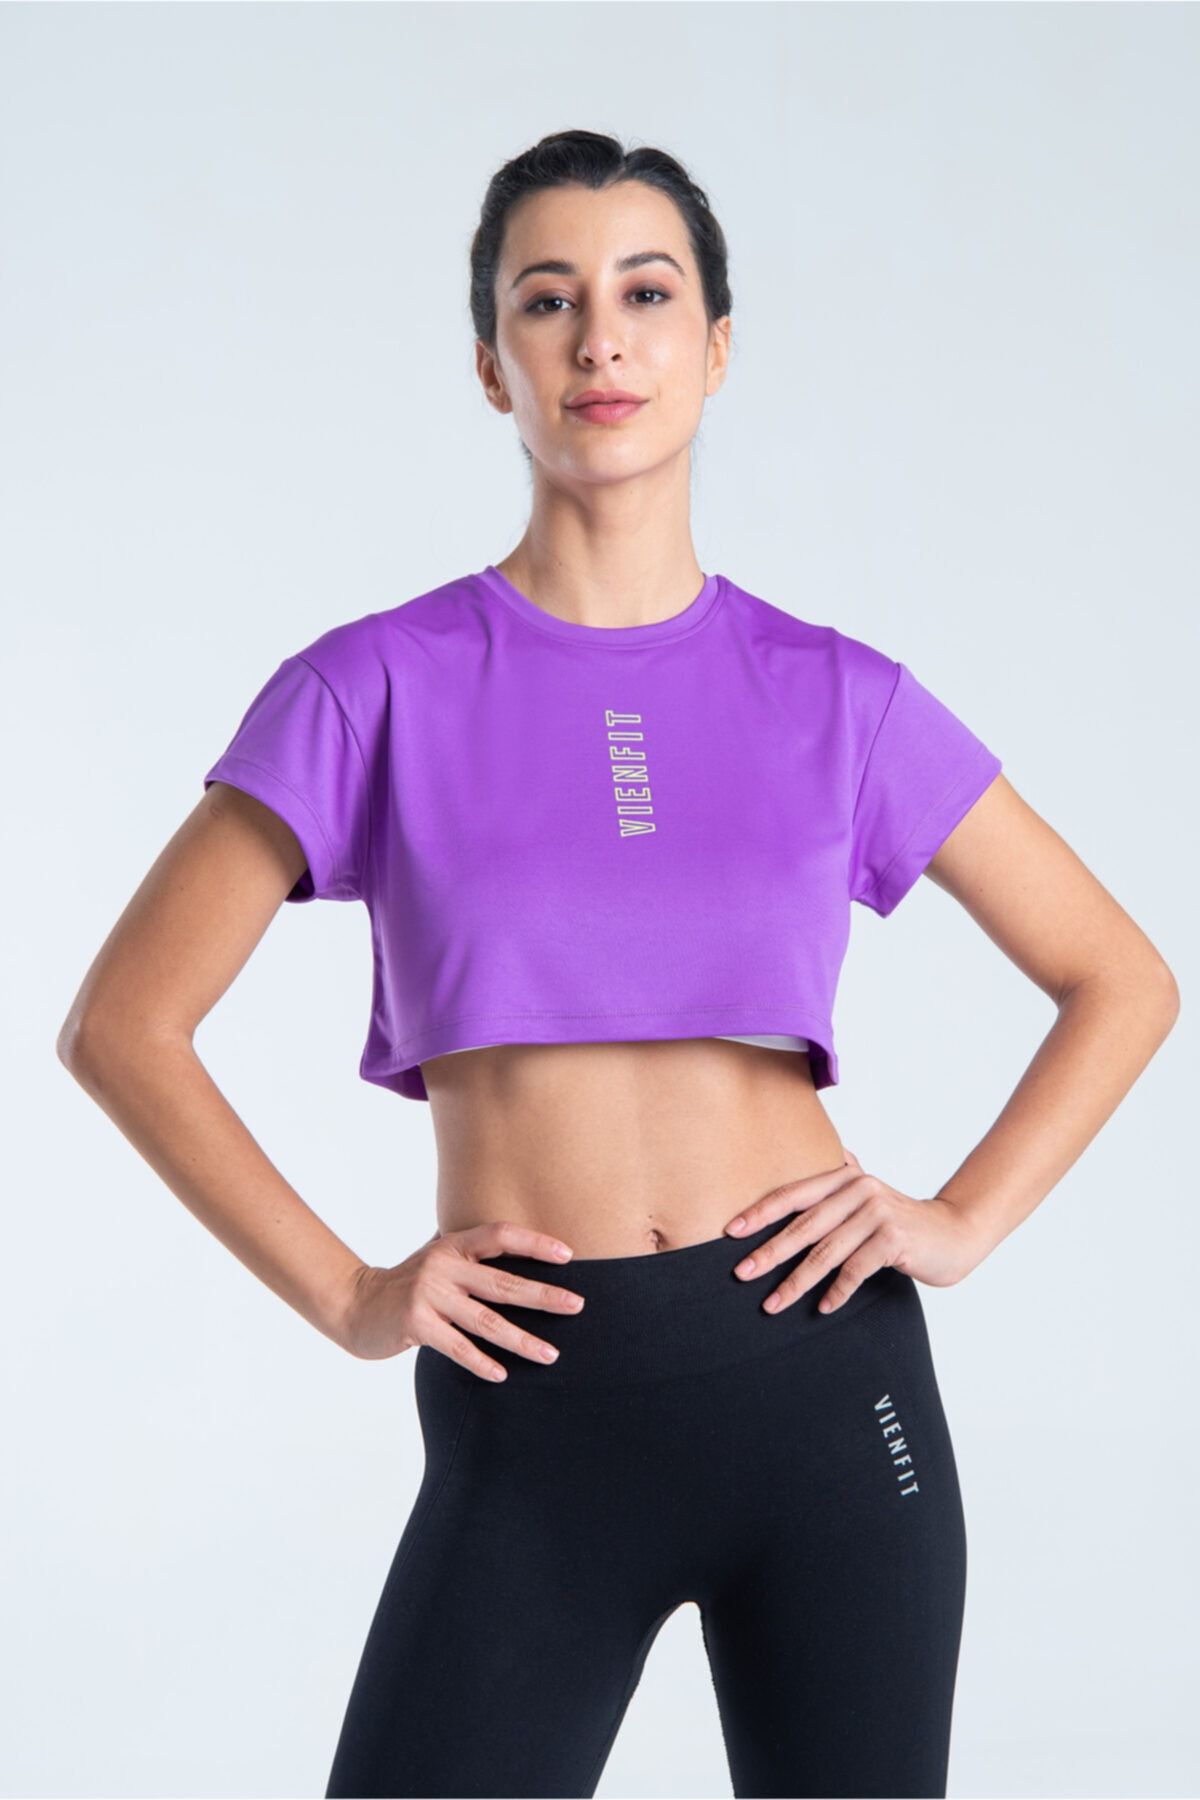 Vienfit Kadın Kısa Baskılı Spor Tshirt - Graphic Crop Top Mor